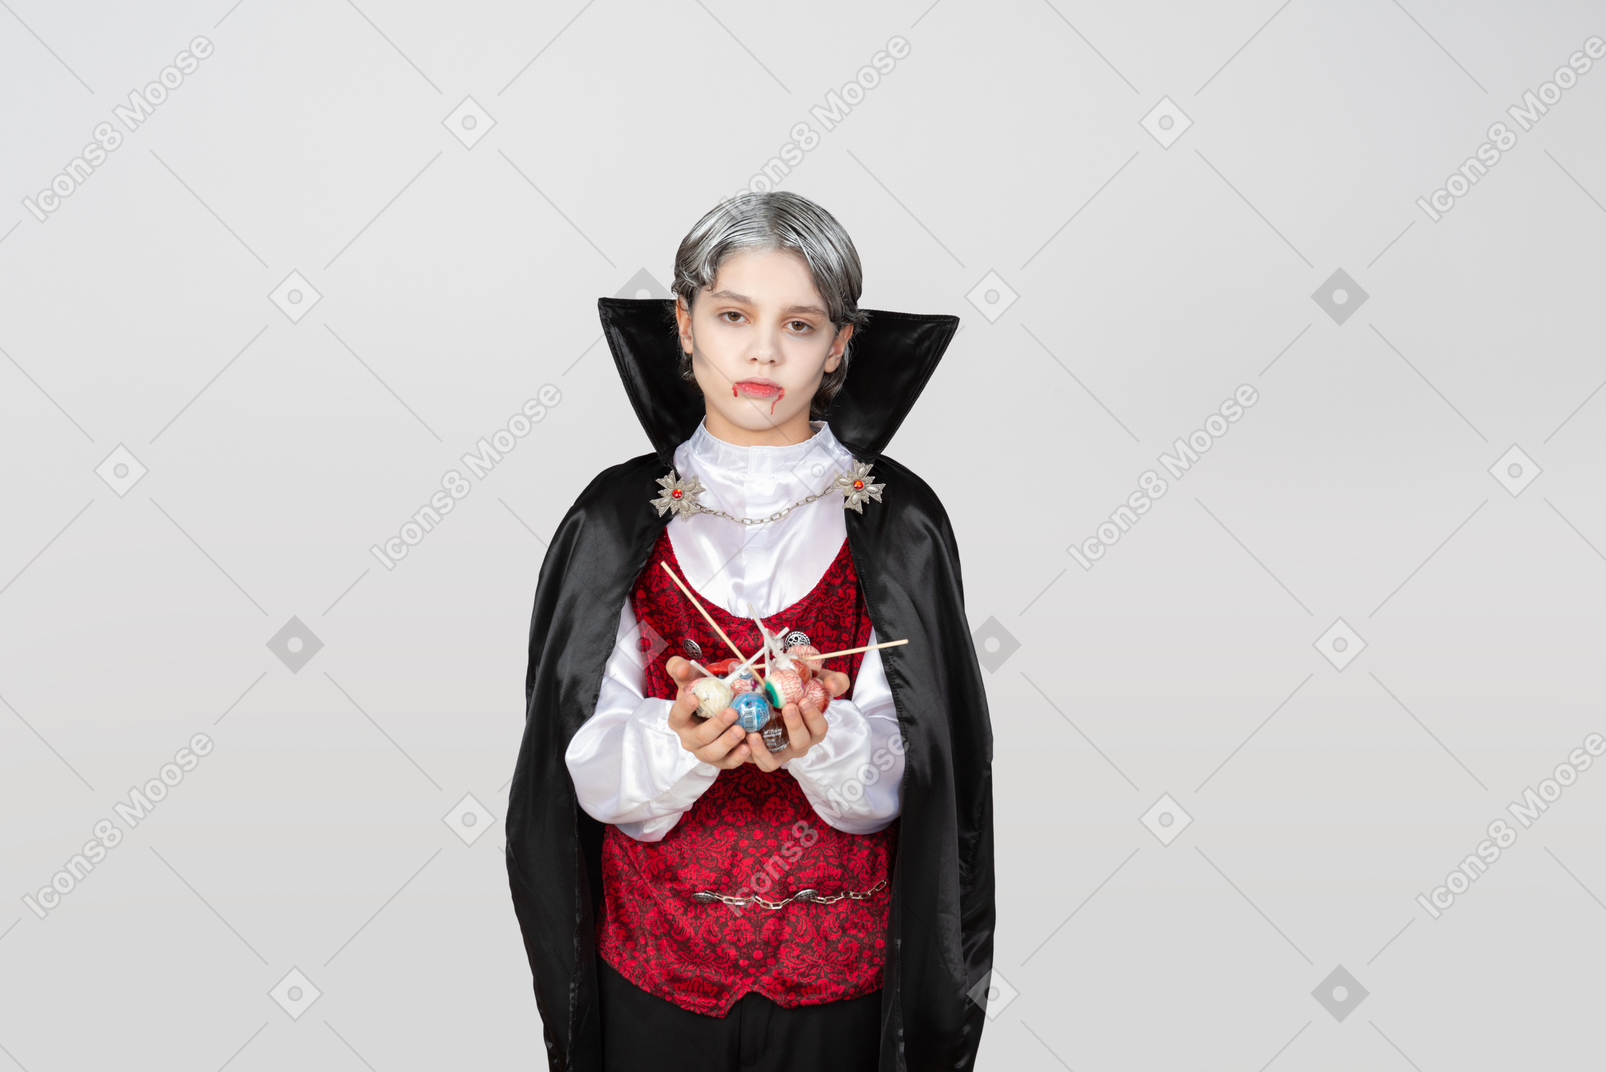 Boy in vampire costume holding candies